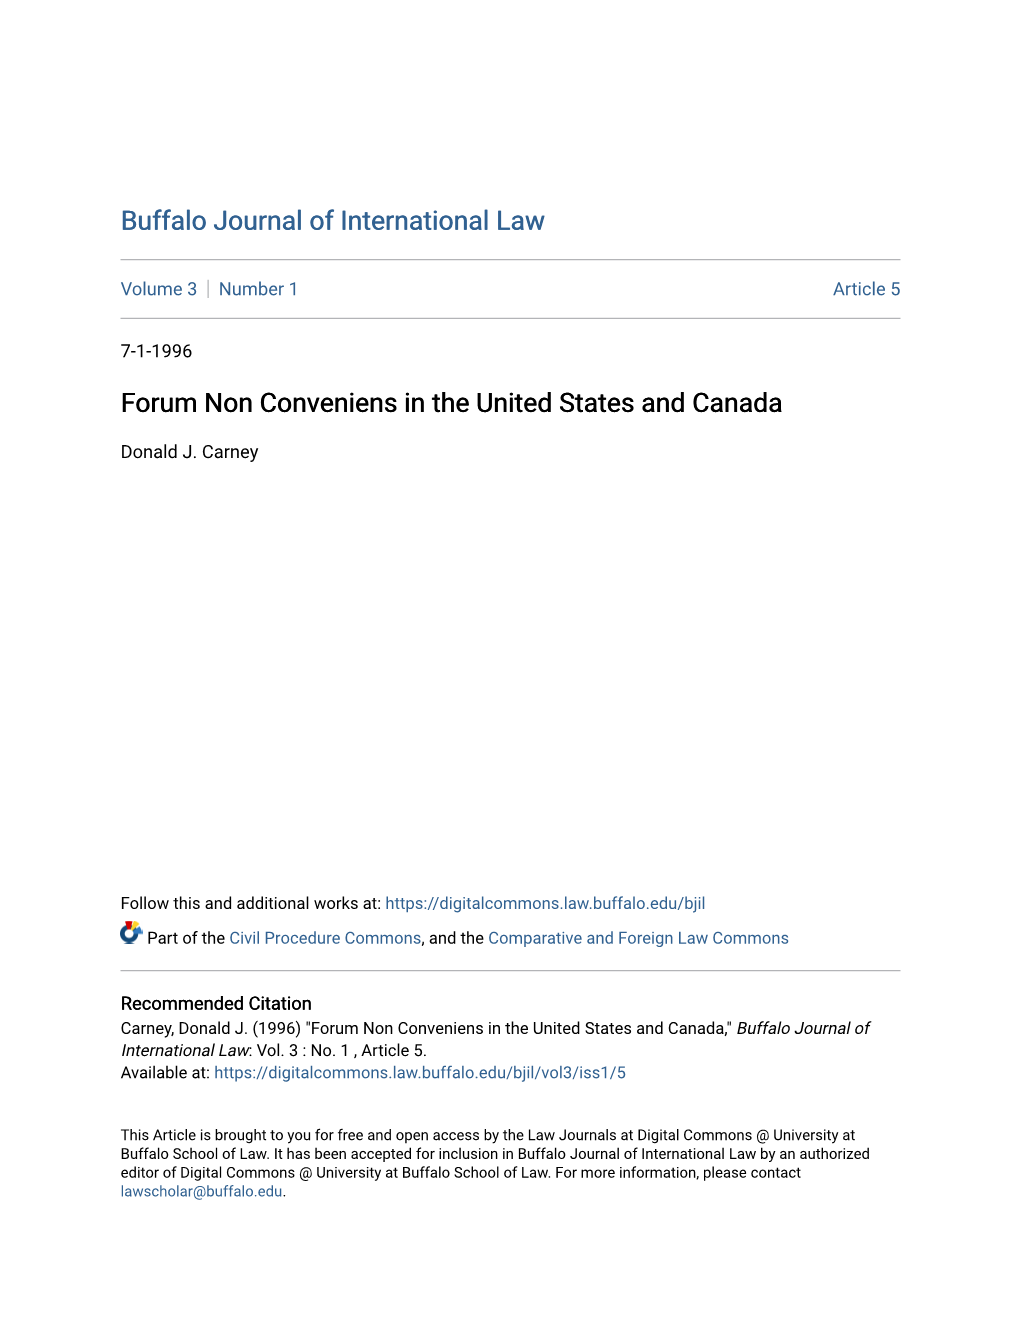 Forum Non Conveniens in the United States and Canada